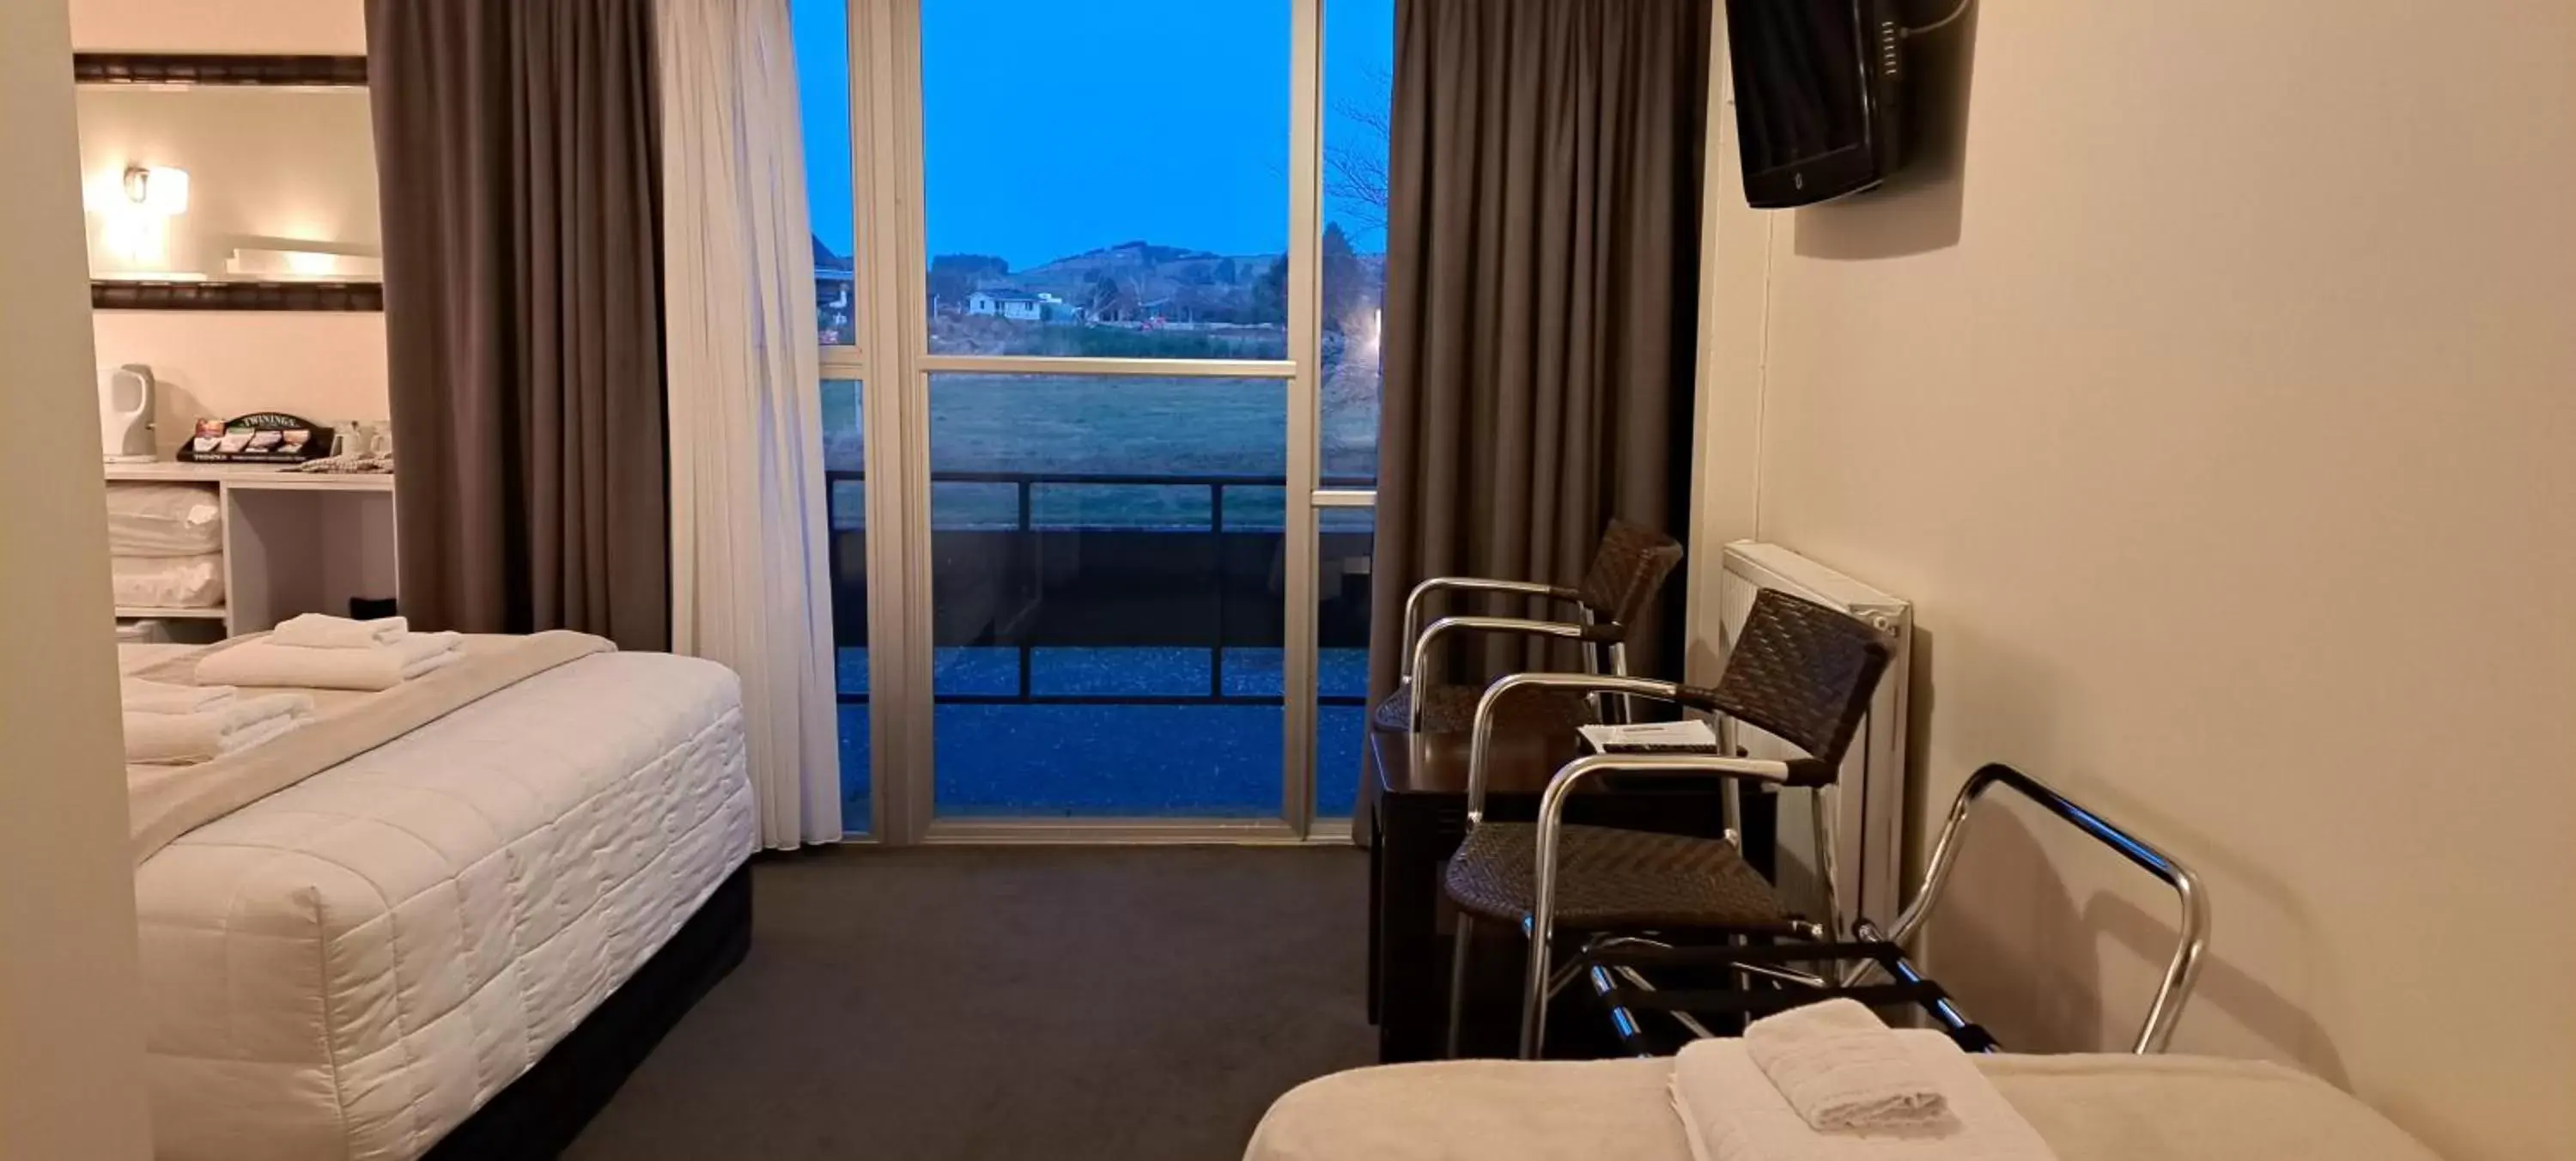 Bedroom in Fiordland Hotel